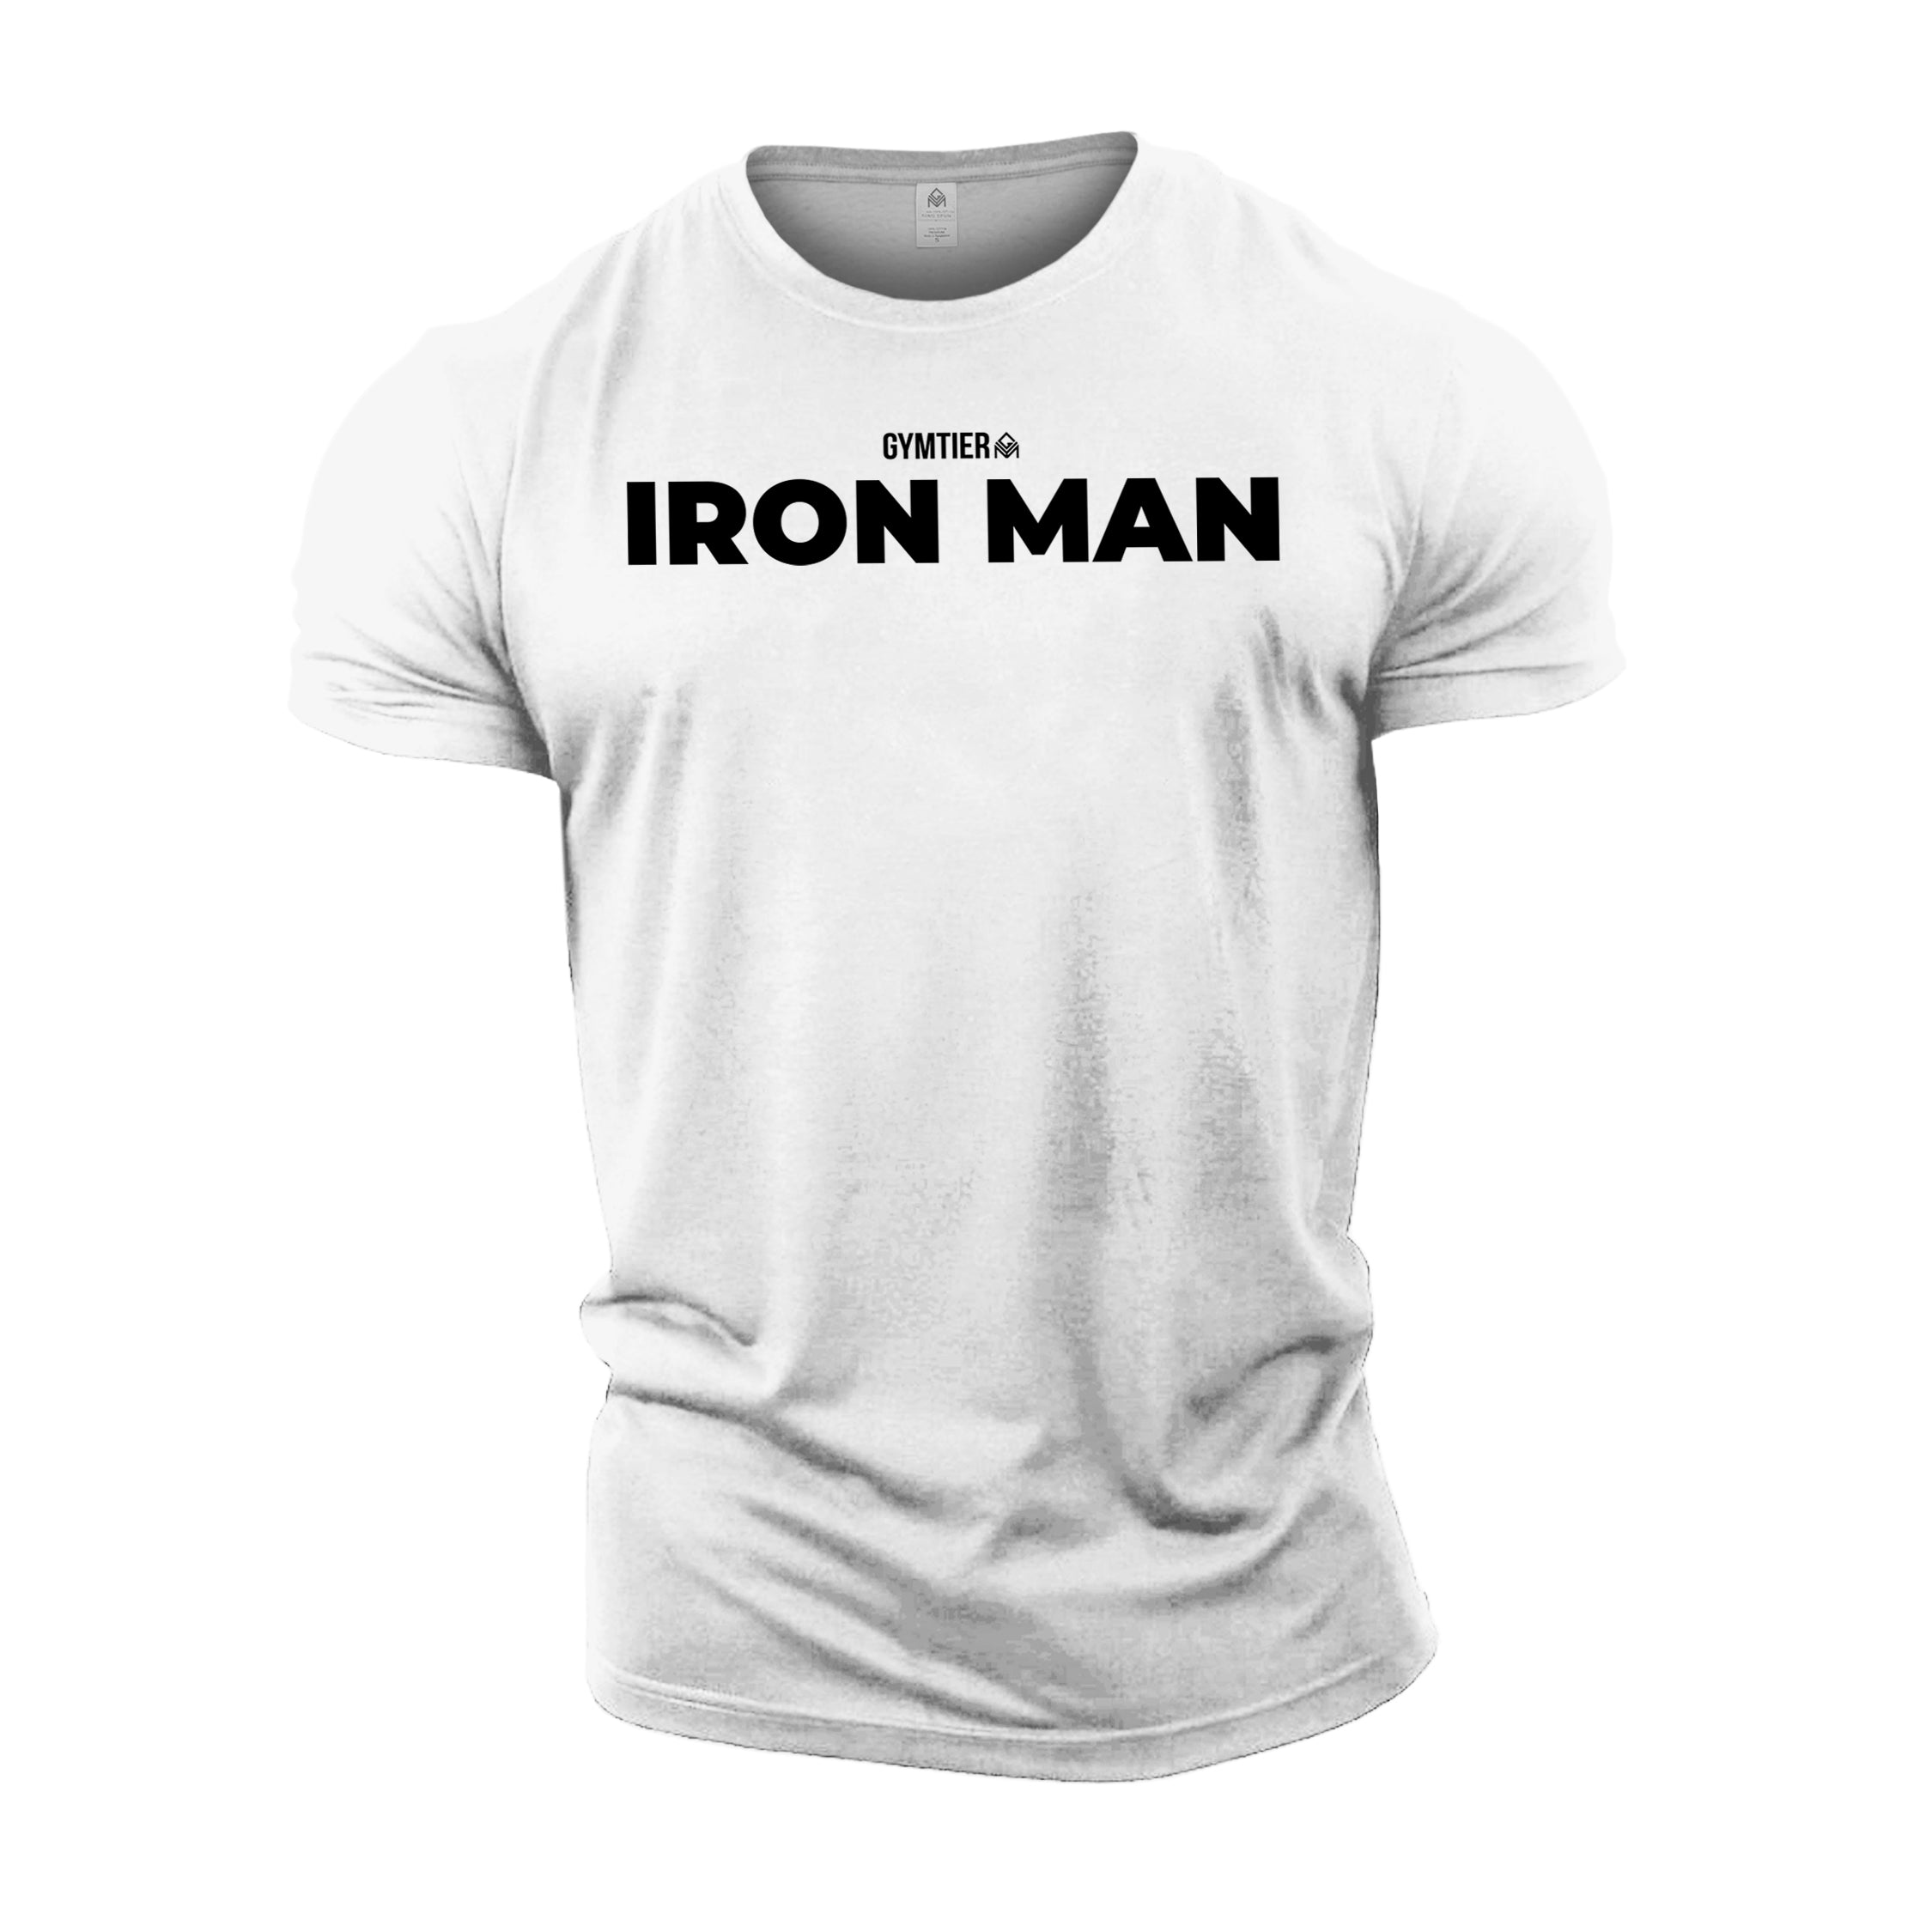 GYMTIER Iron Man - Gym T-Shirt